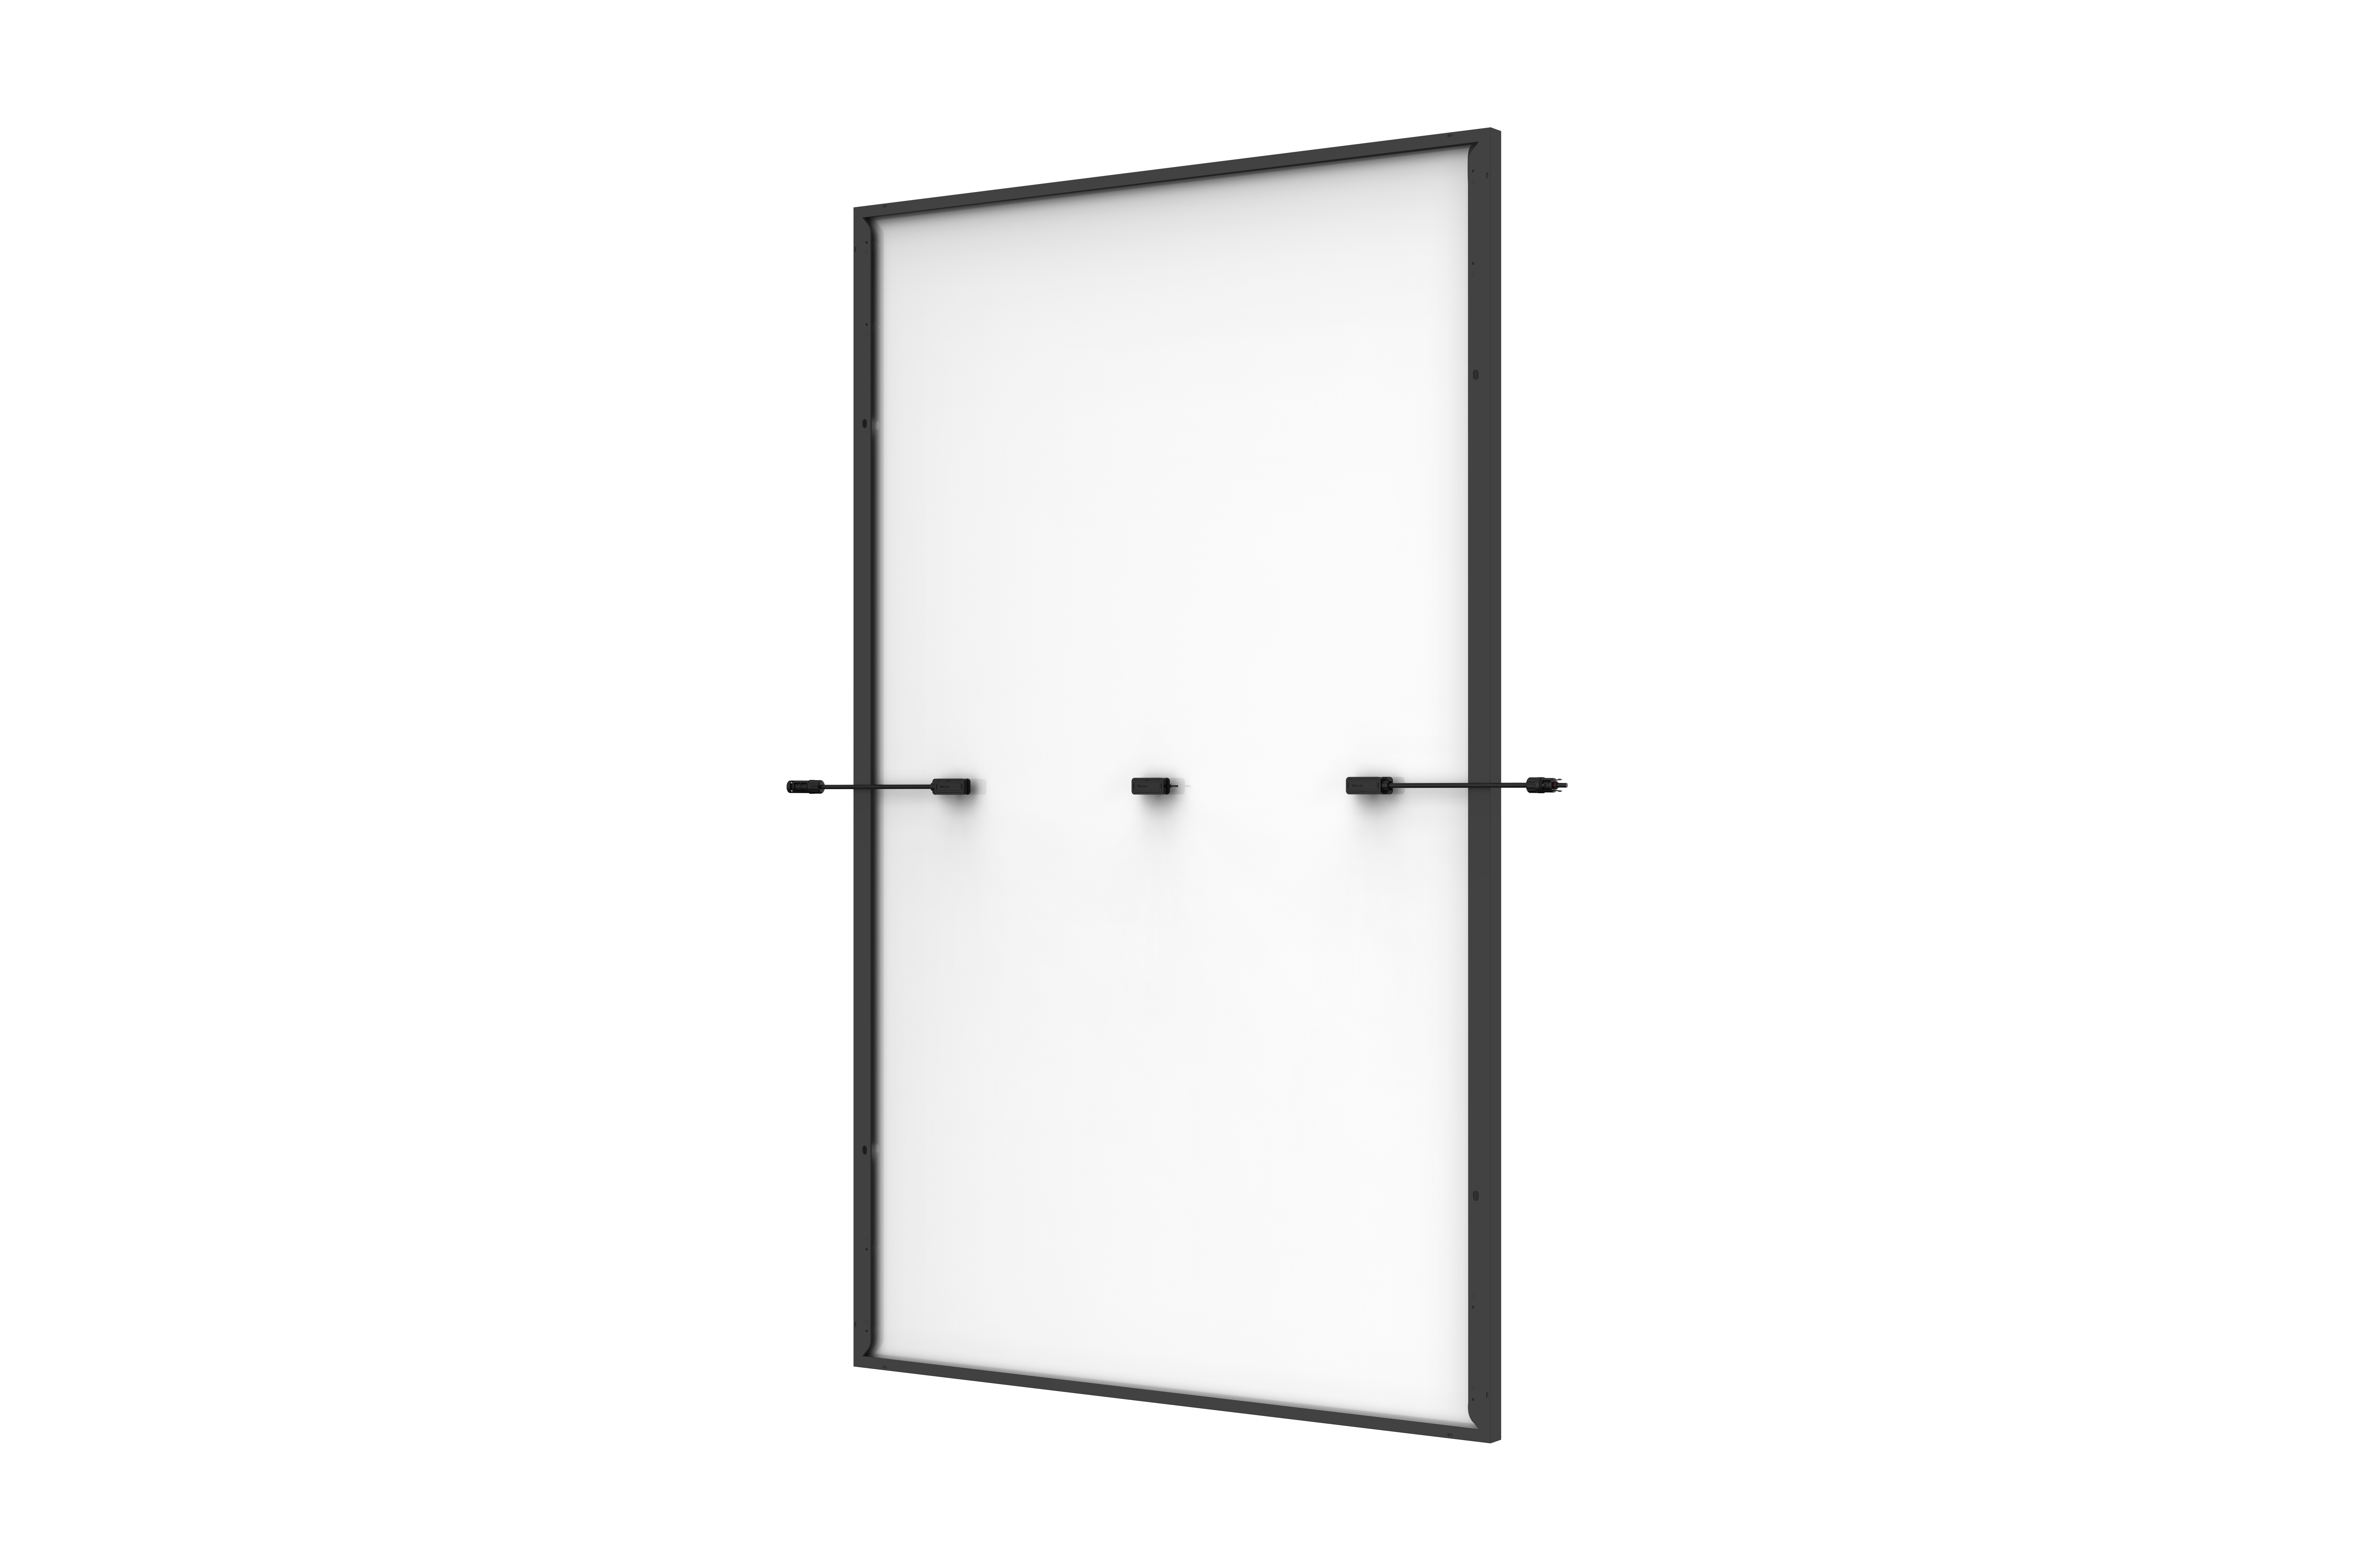 Trina Vertex S+ TSM-NEG9R.28/440Wp Monofazial Glas-Glas Black Frame (Container)